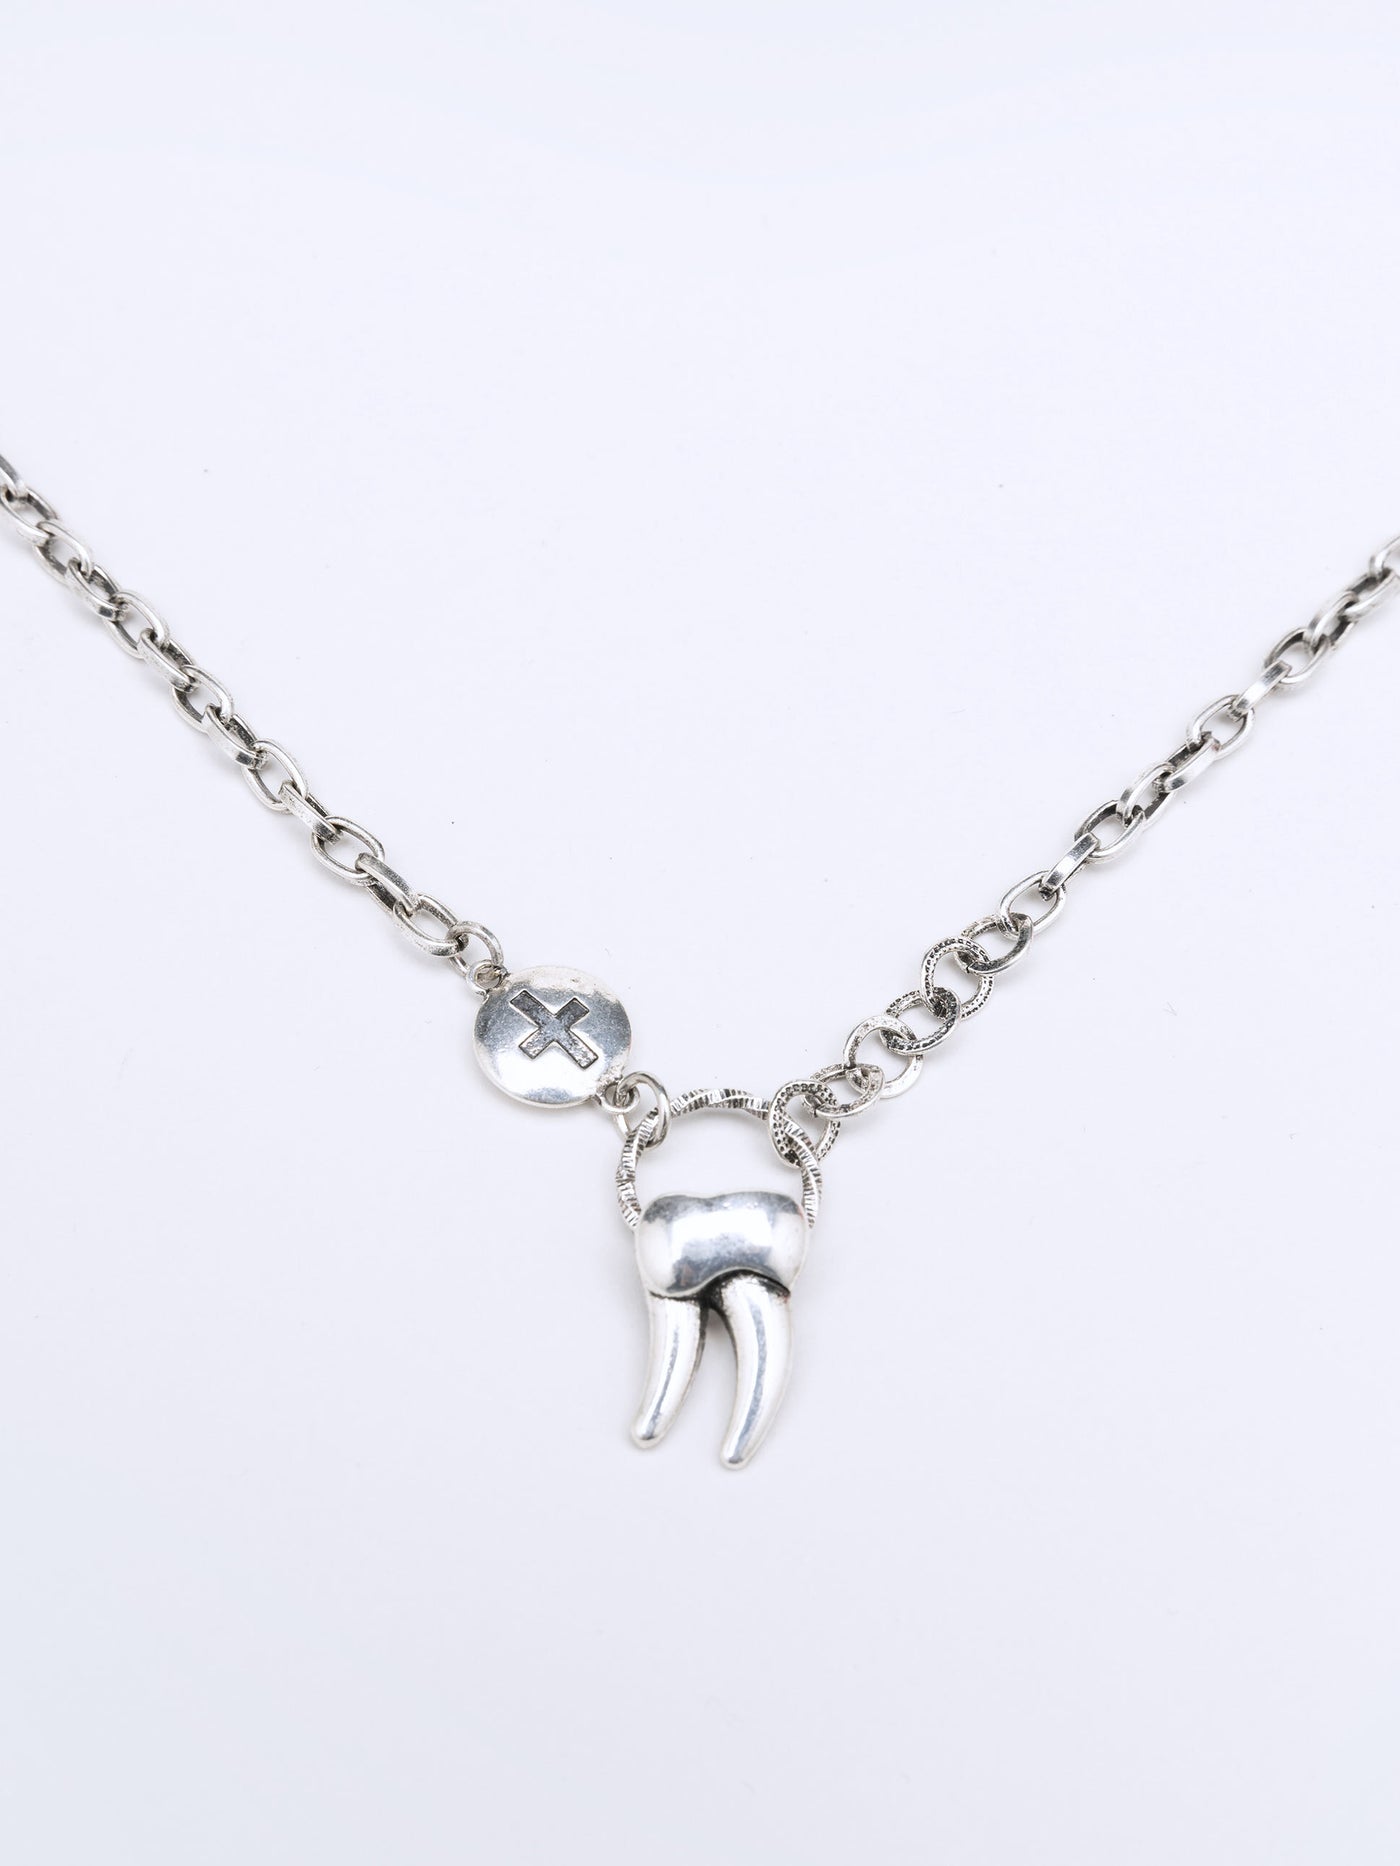 Wisdom Tooth Gothic Pendant Necklace